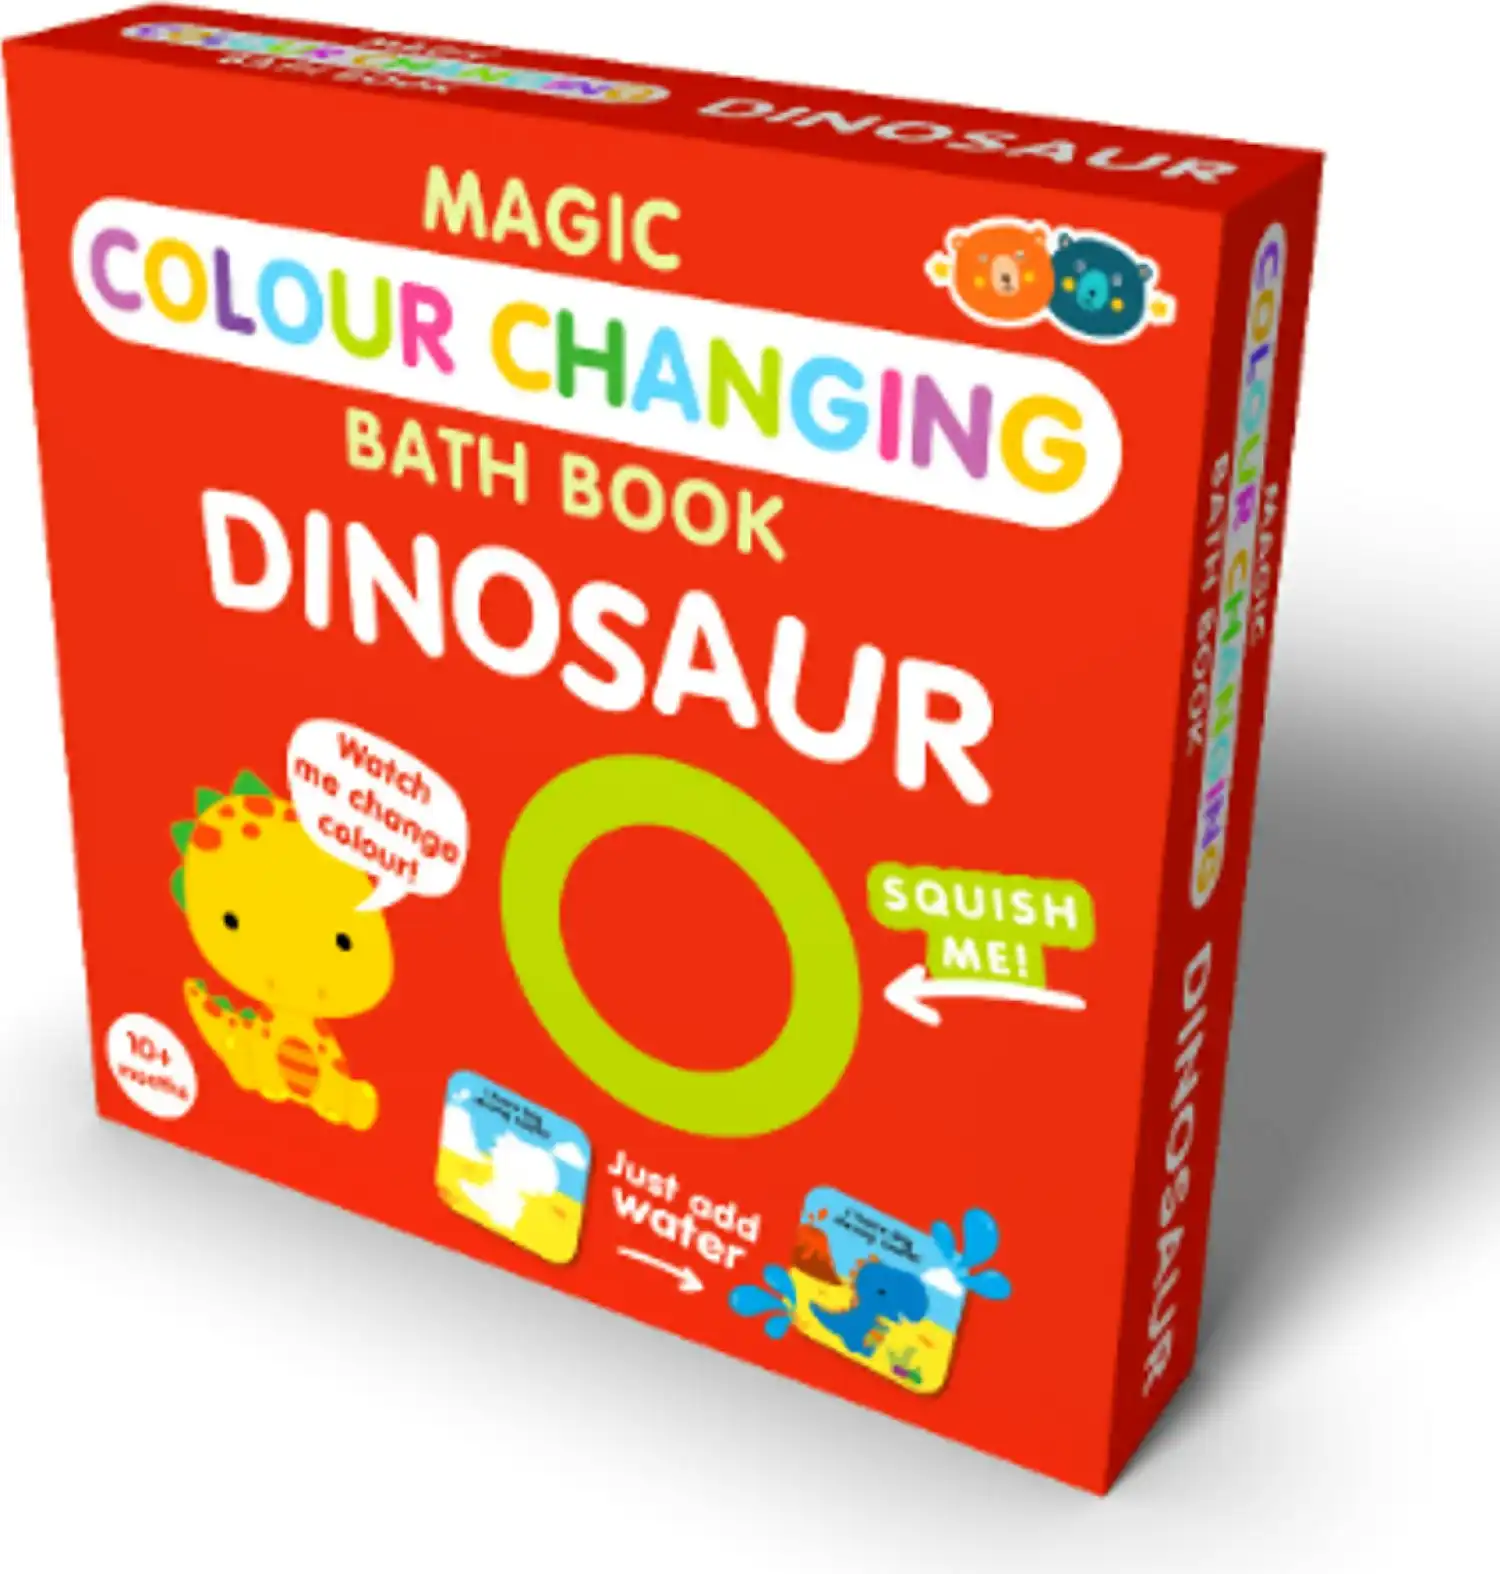 Buddy & Barney - Magic Colour Changing Bath Book - Dinosaur - Mh